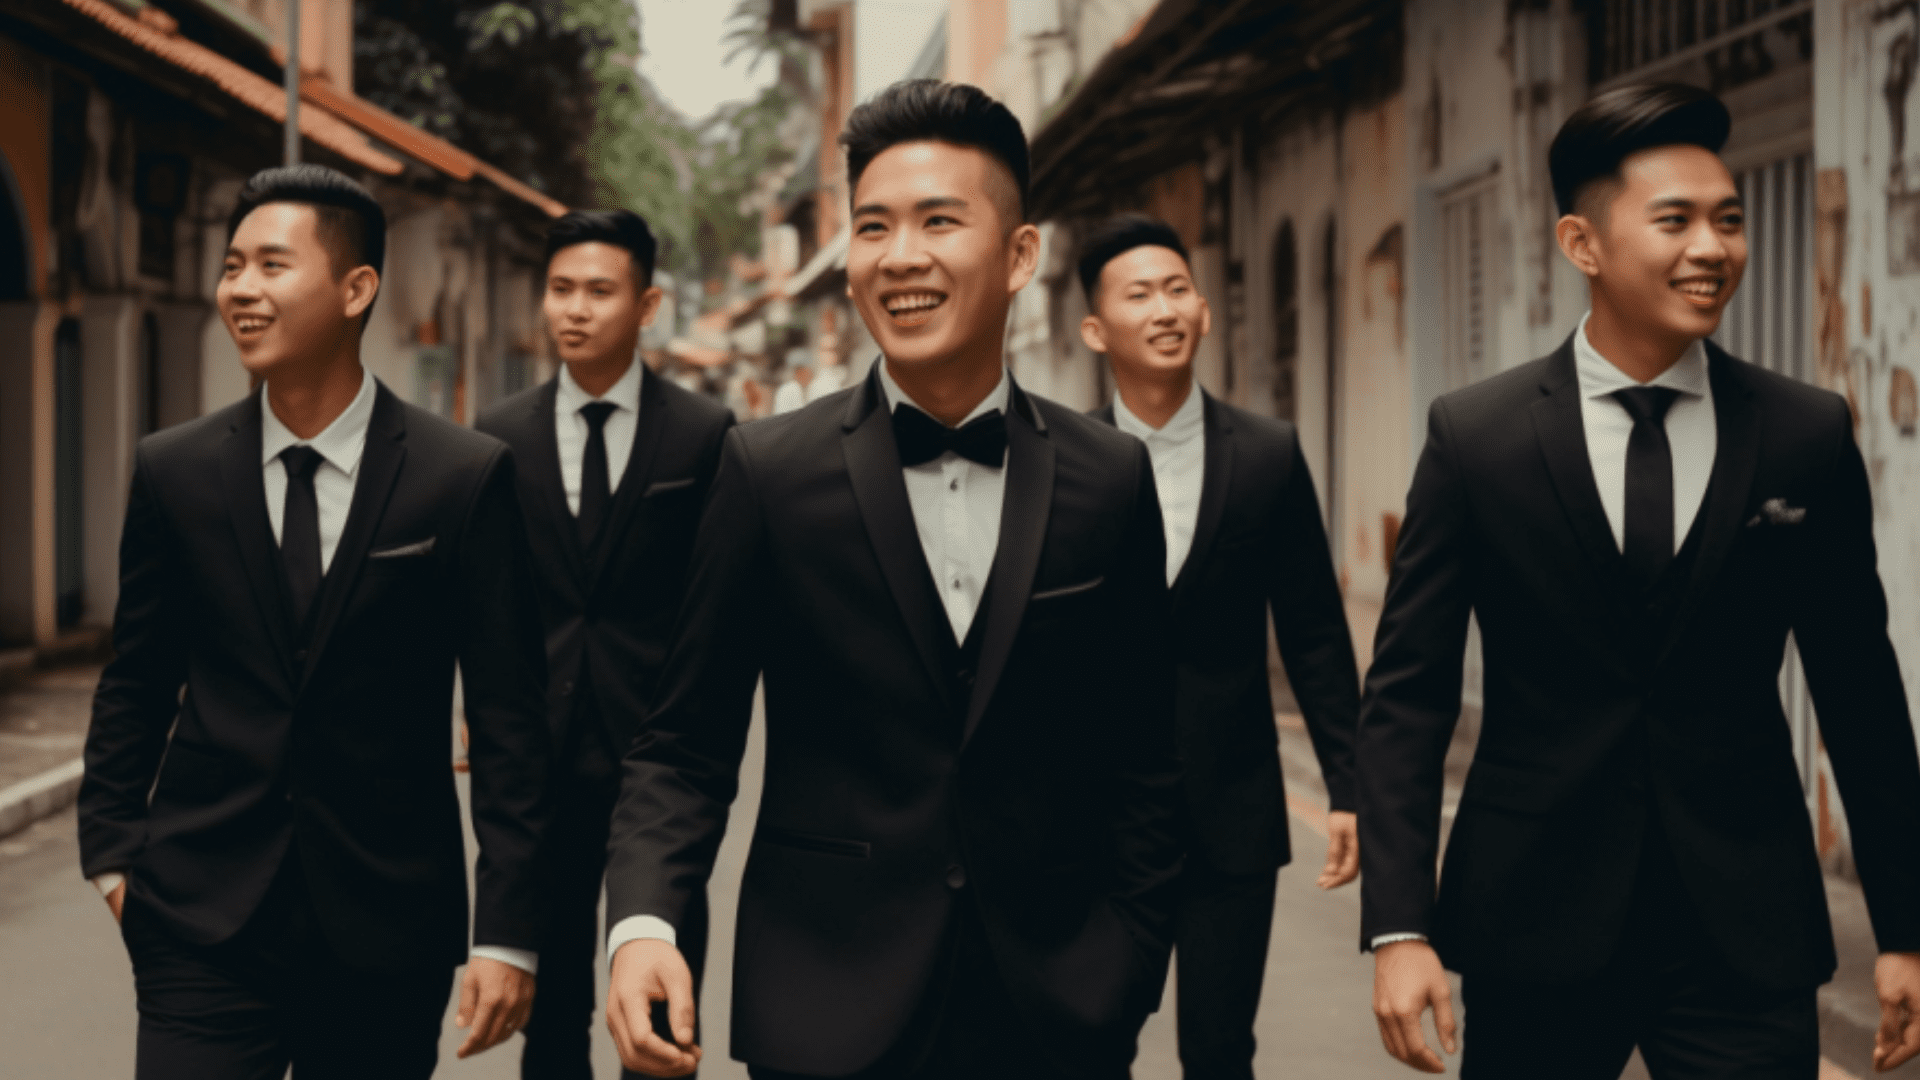 groomsmen wedding fashion wedding style malaysia groomsmen wedding malaysia